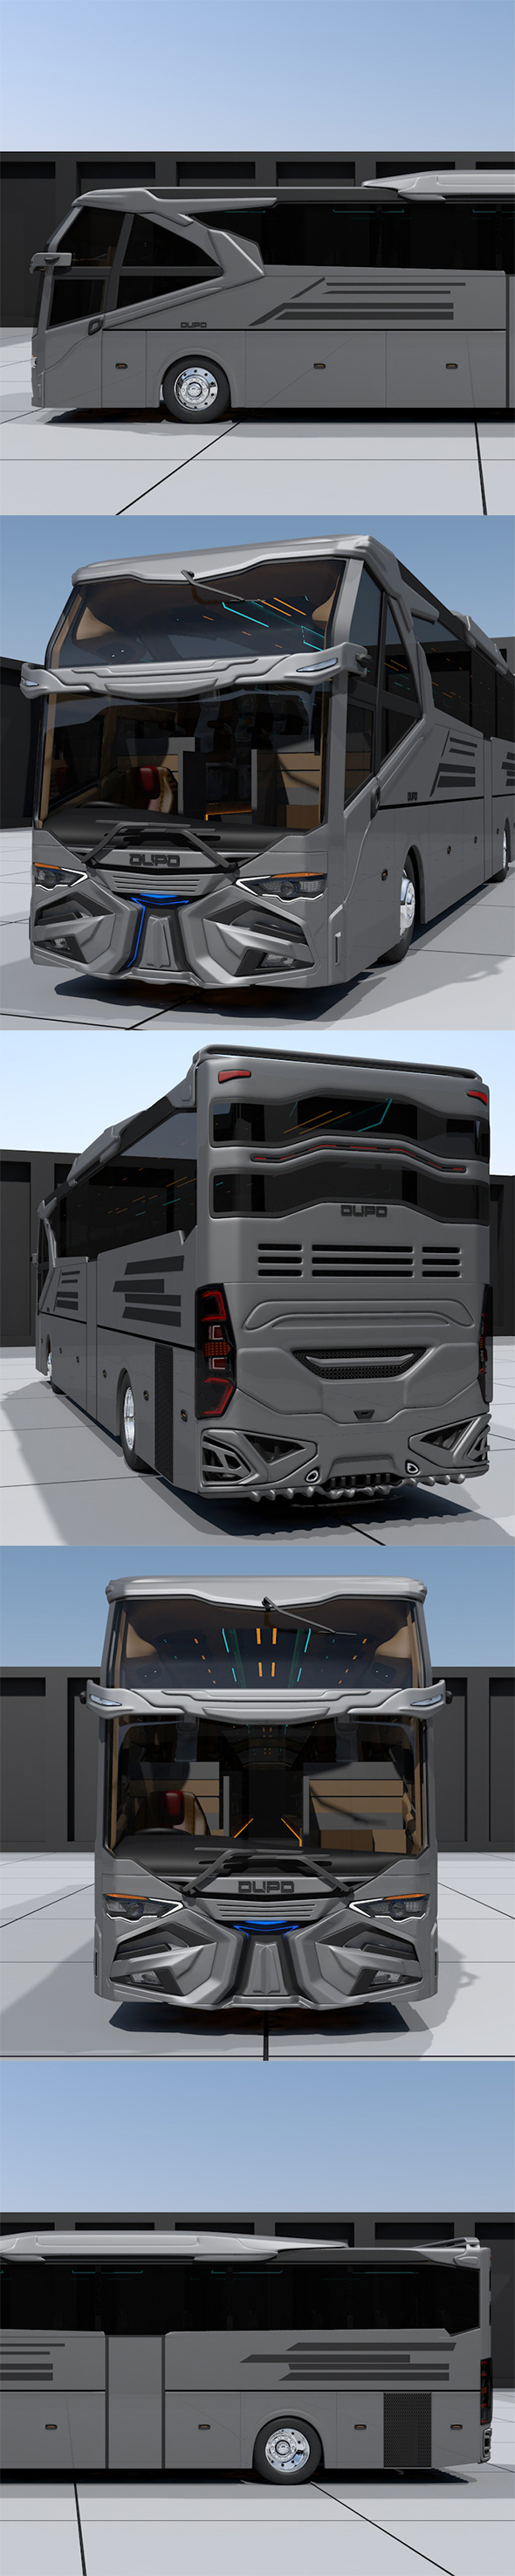 DUPD Bus 2